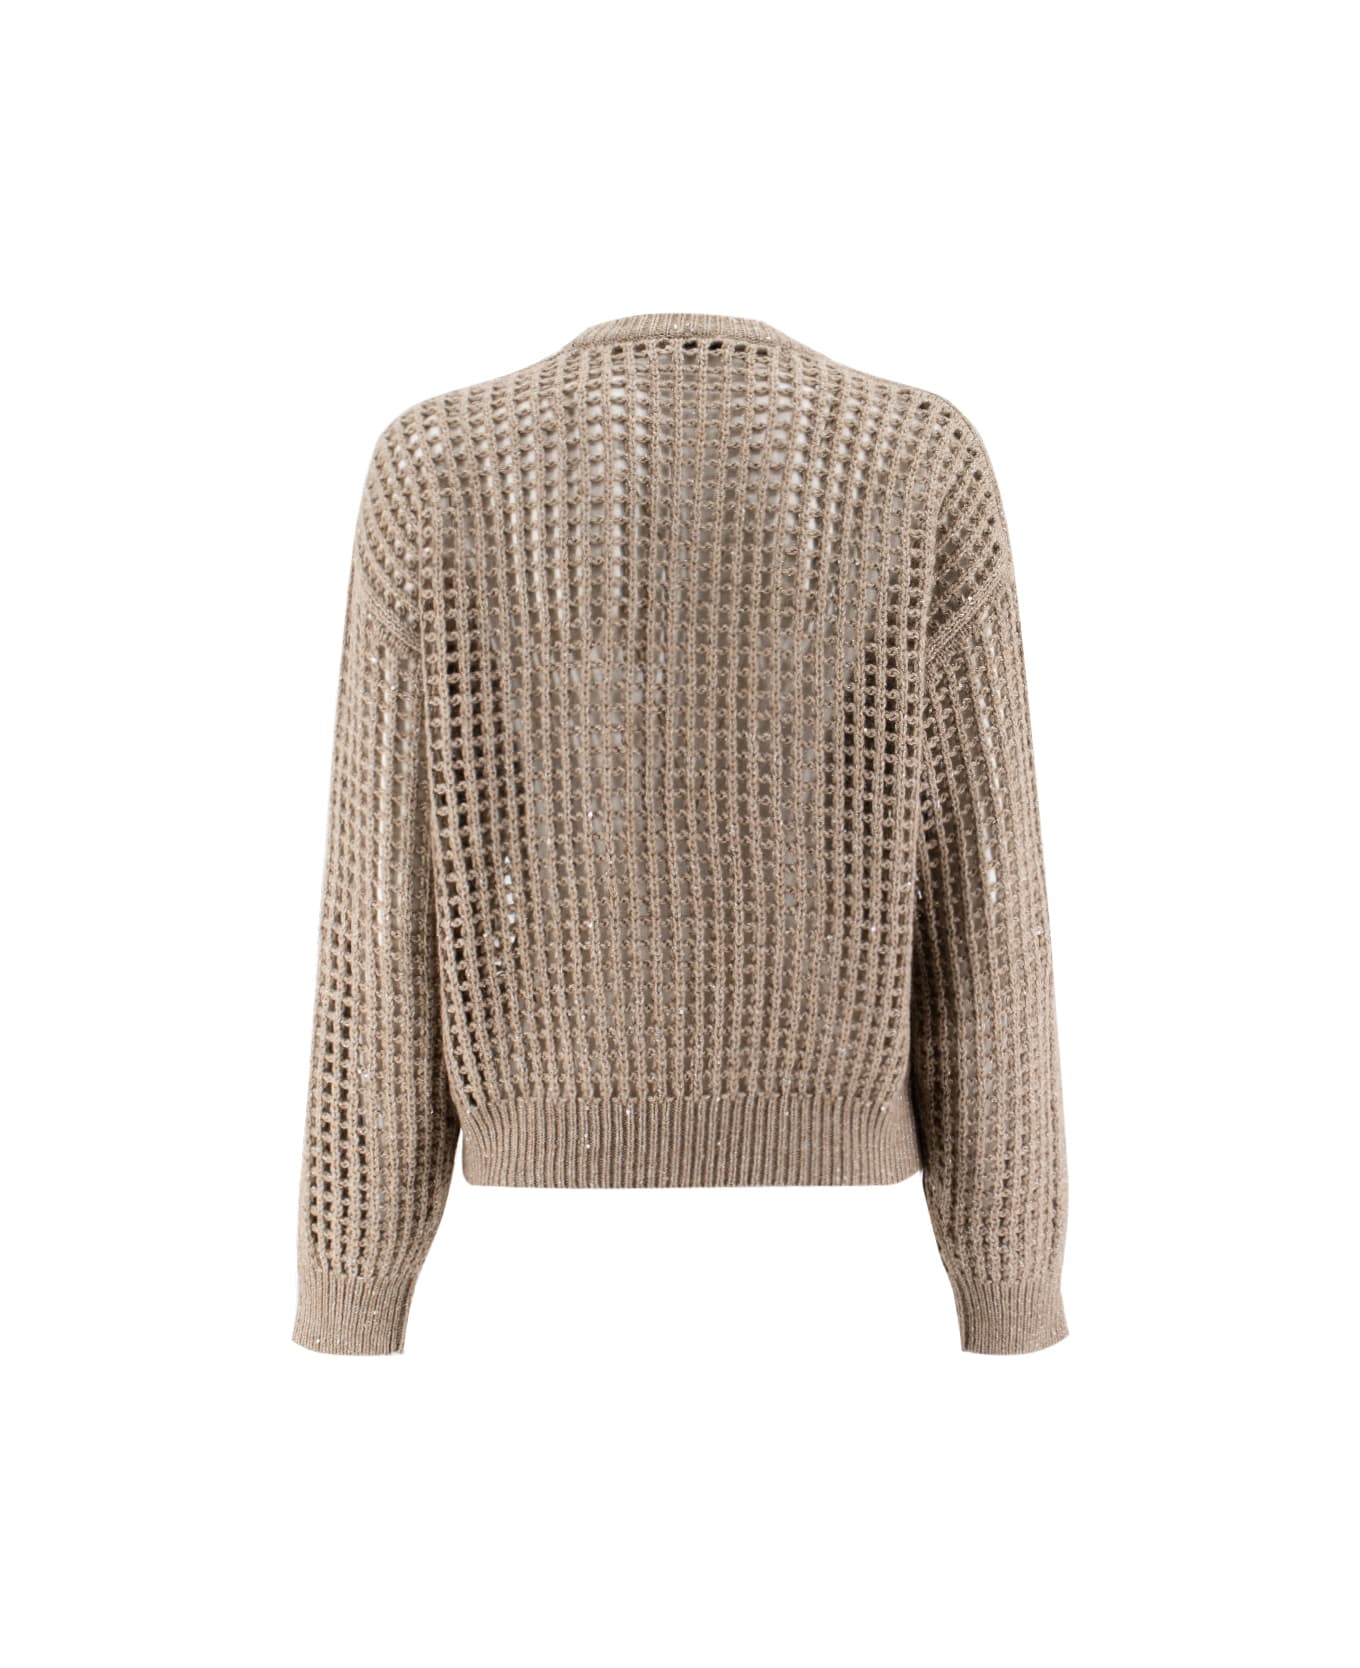 Brunello Cucinelli Sparkling Net Sweater - NOCE  BROWN CALDO